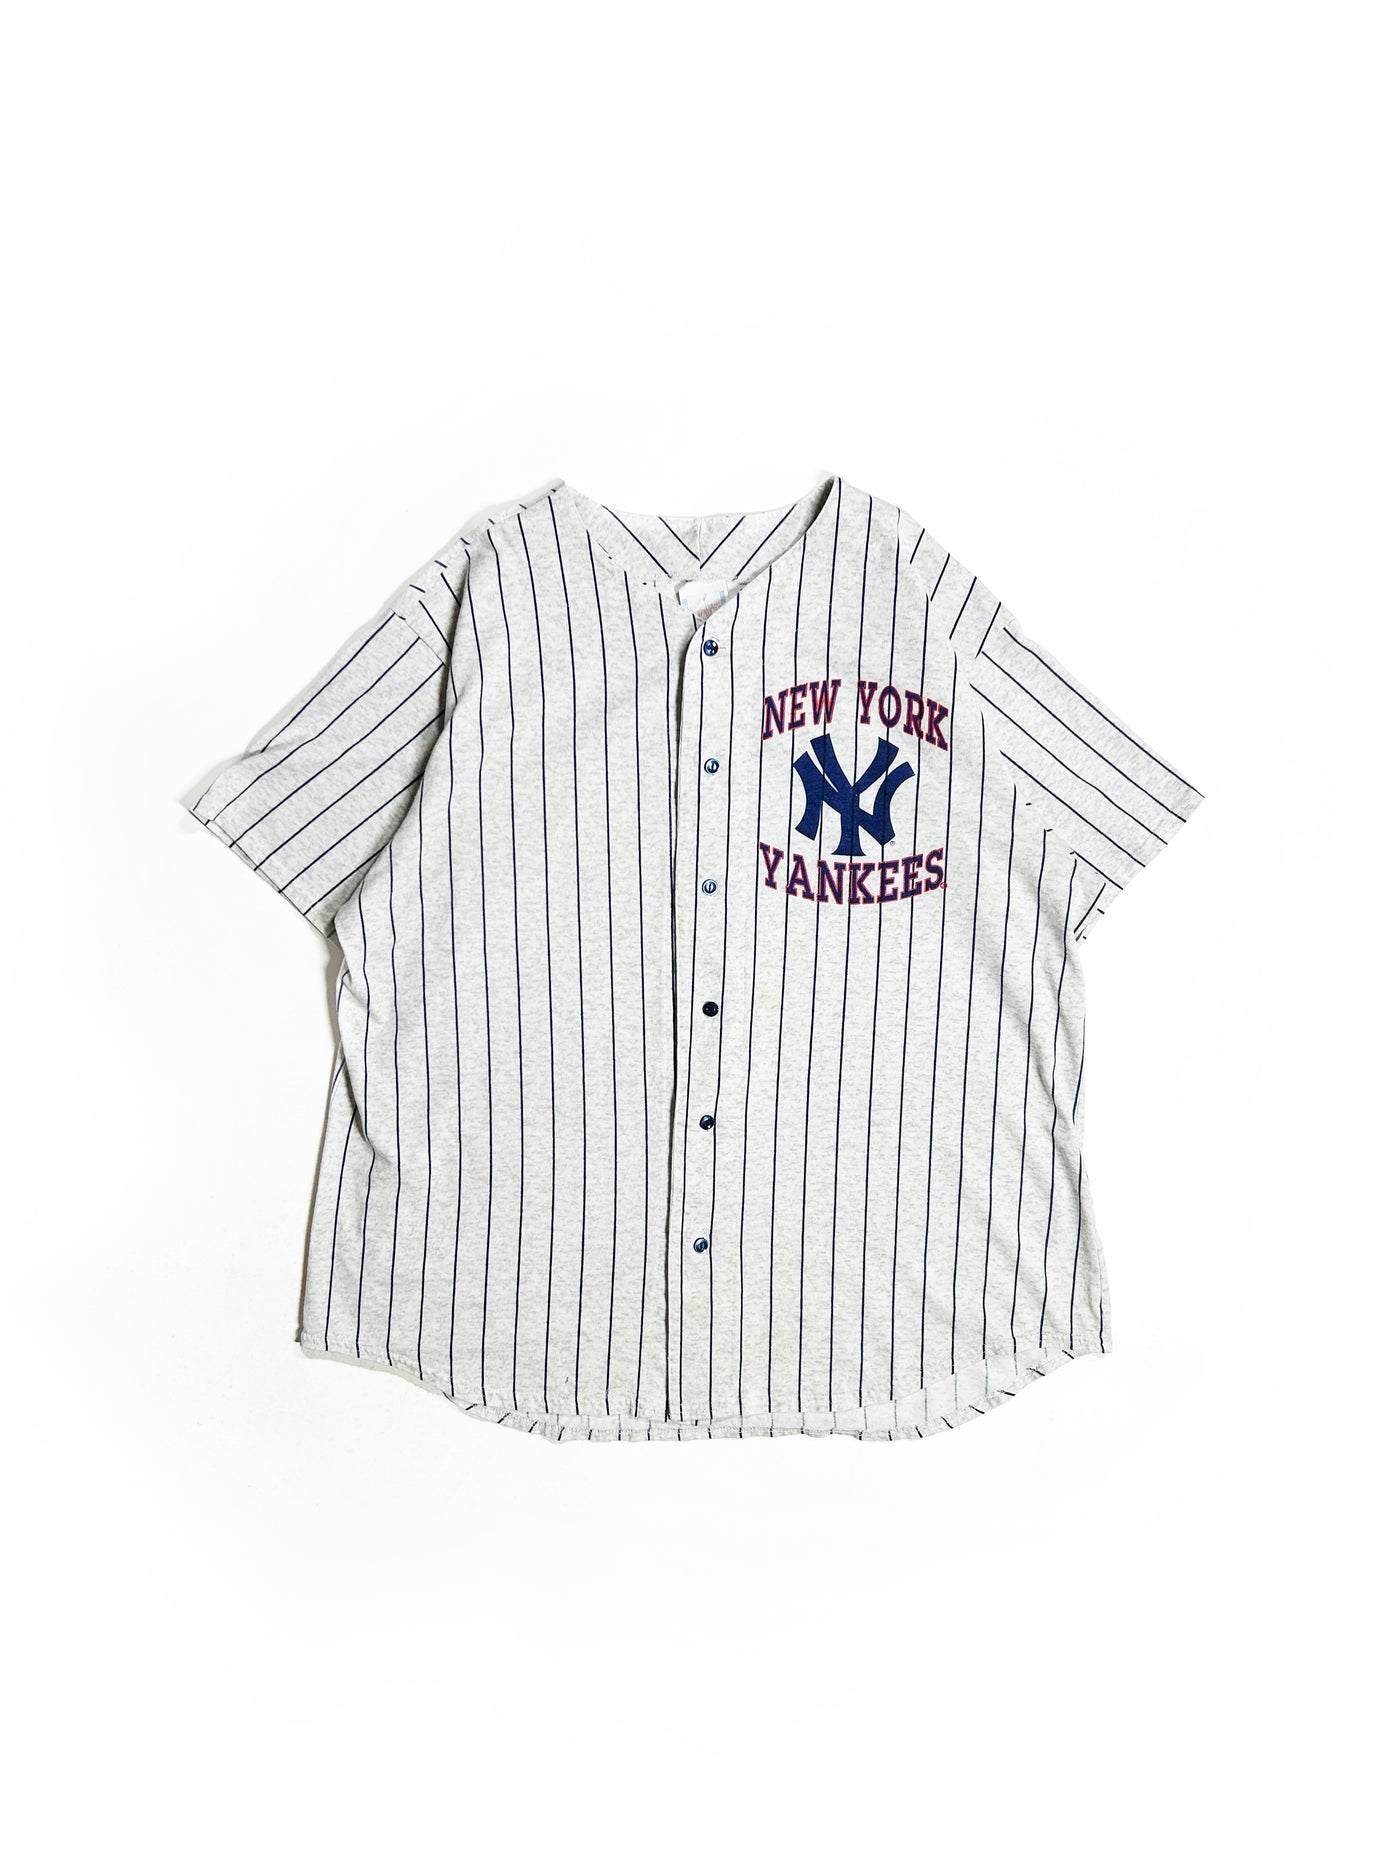 Vintage 90s New York Yankees Baseball Jersey